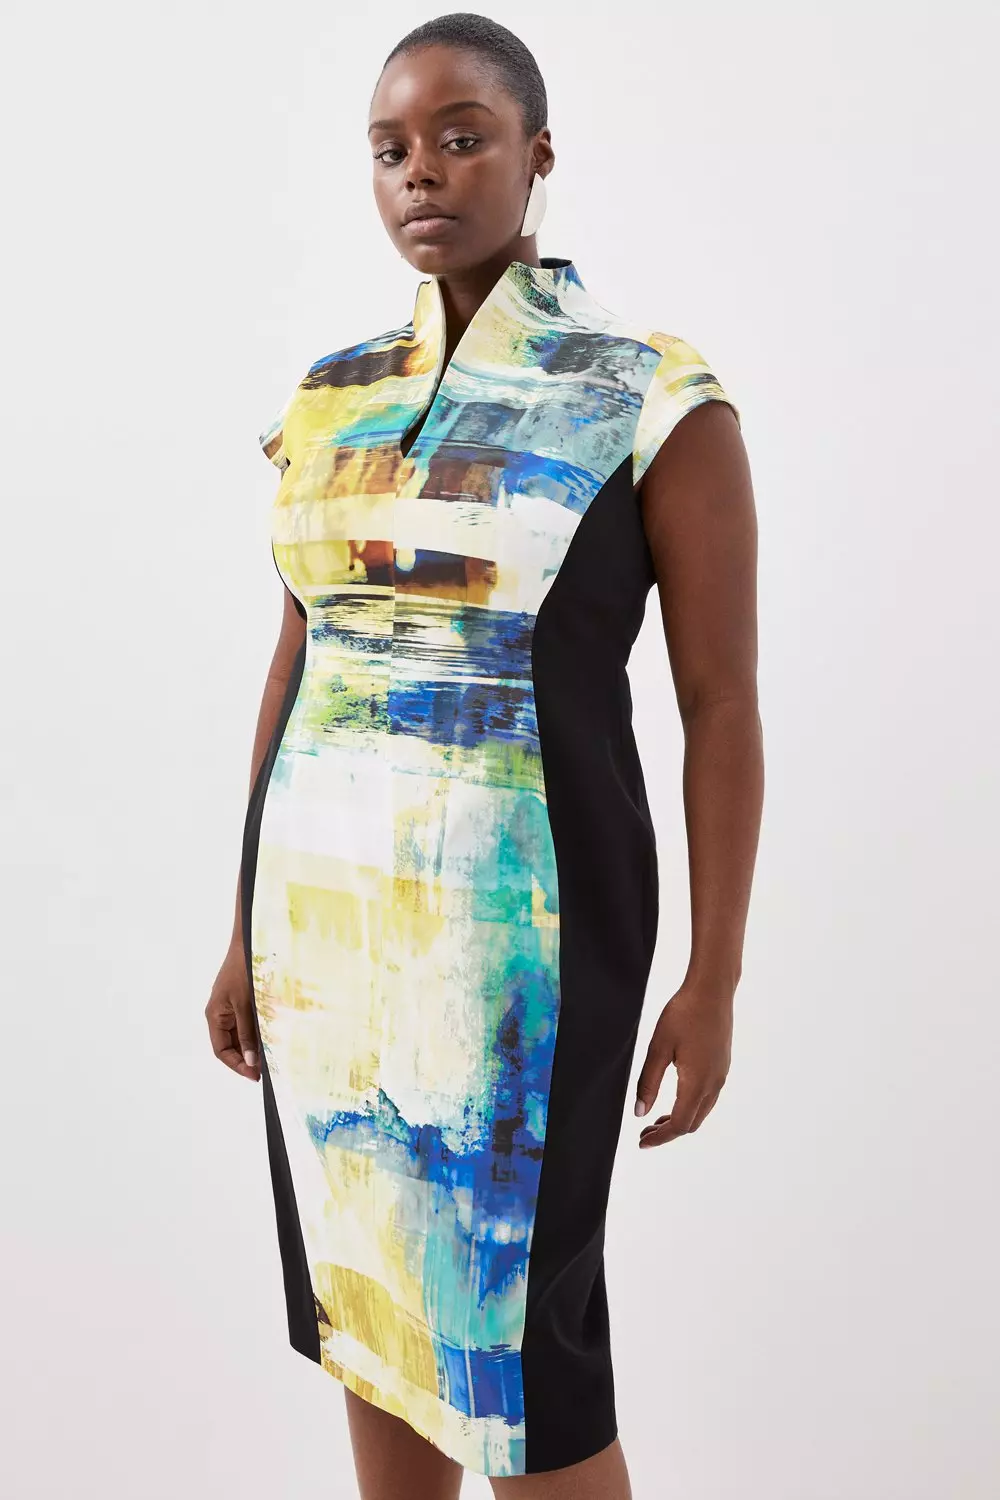 Plus Size African Women's Slim Waist Bodycon Professional Fashion Dress -  The Little Connection